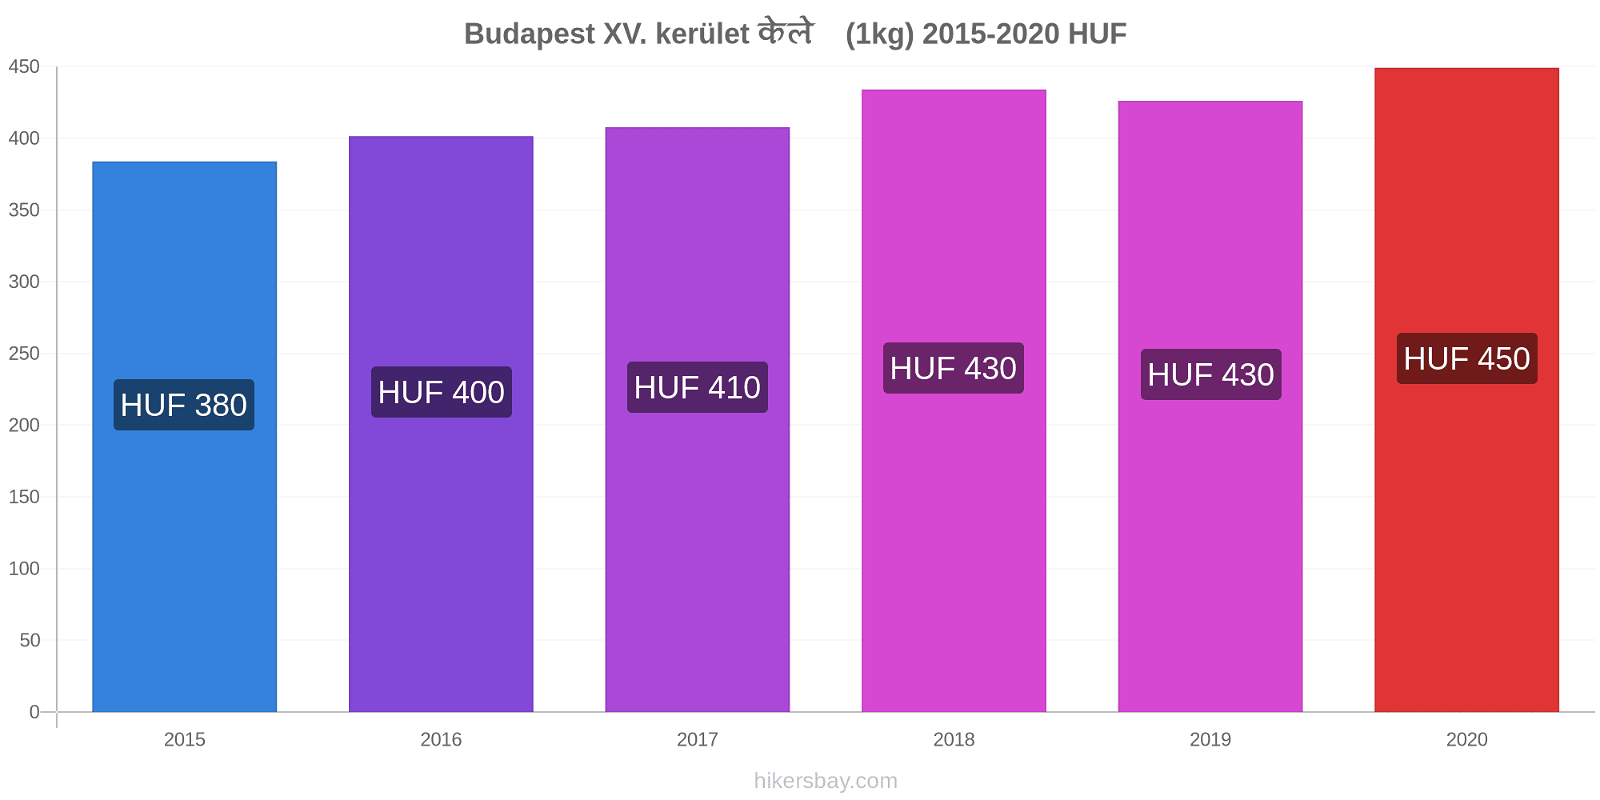 Budapest XV. kerület मूल्य परिवर्तन केले (1kg) hikersbay.com